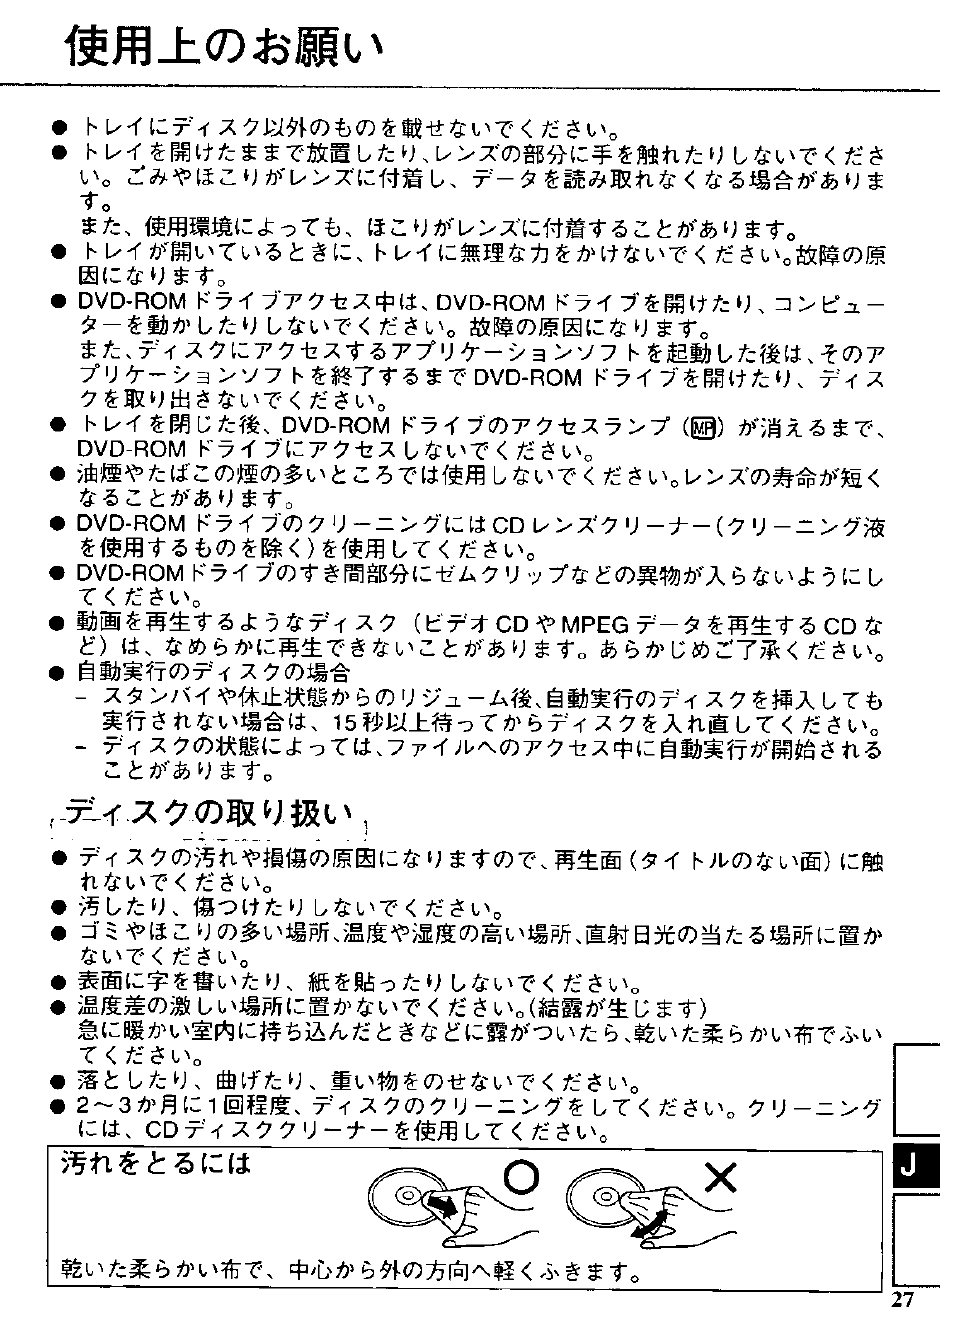 D4l^t | Panasonic DVD-ROM CF-VDD283 Manuel d'utilisation | Page 27 / 36